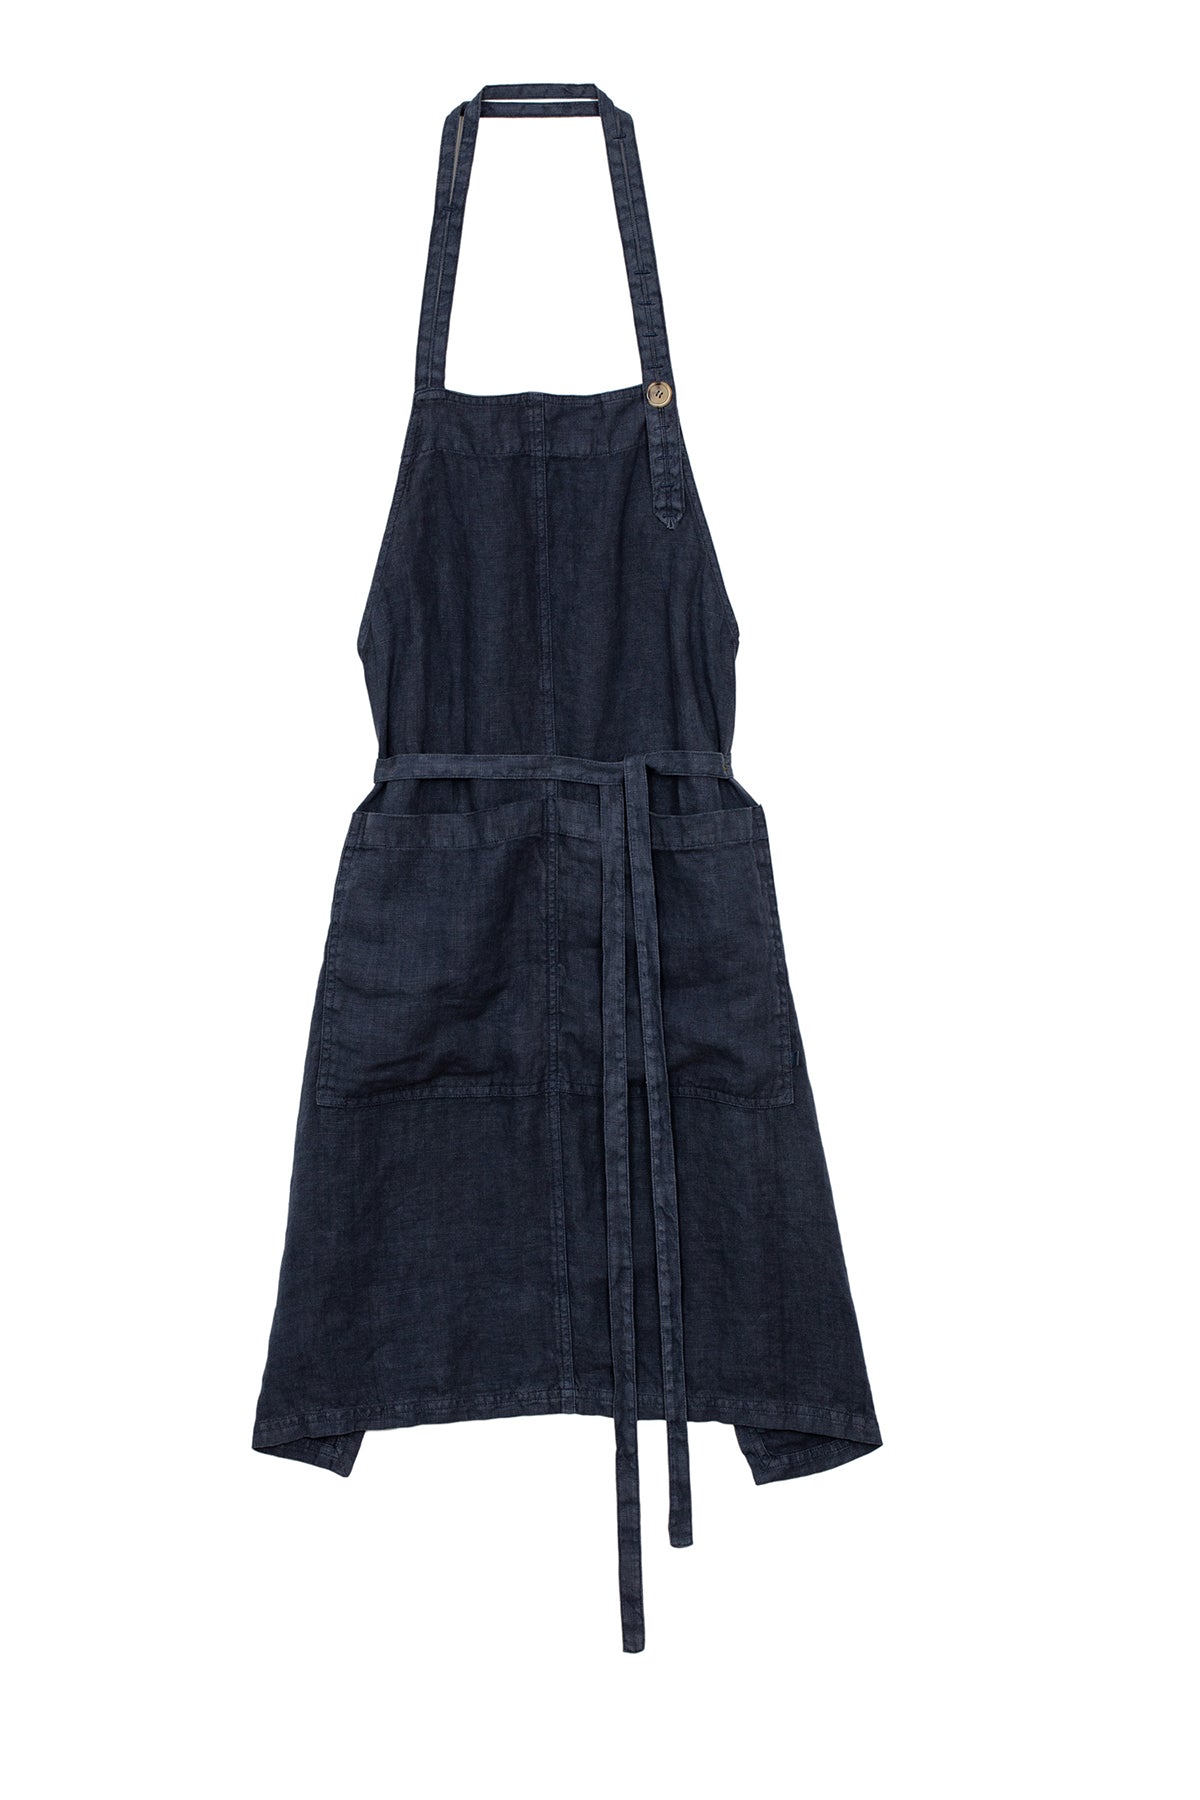 Linen apron - indigo with adjustable neck strap by Jenny Graham Home.-25520474390721